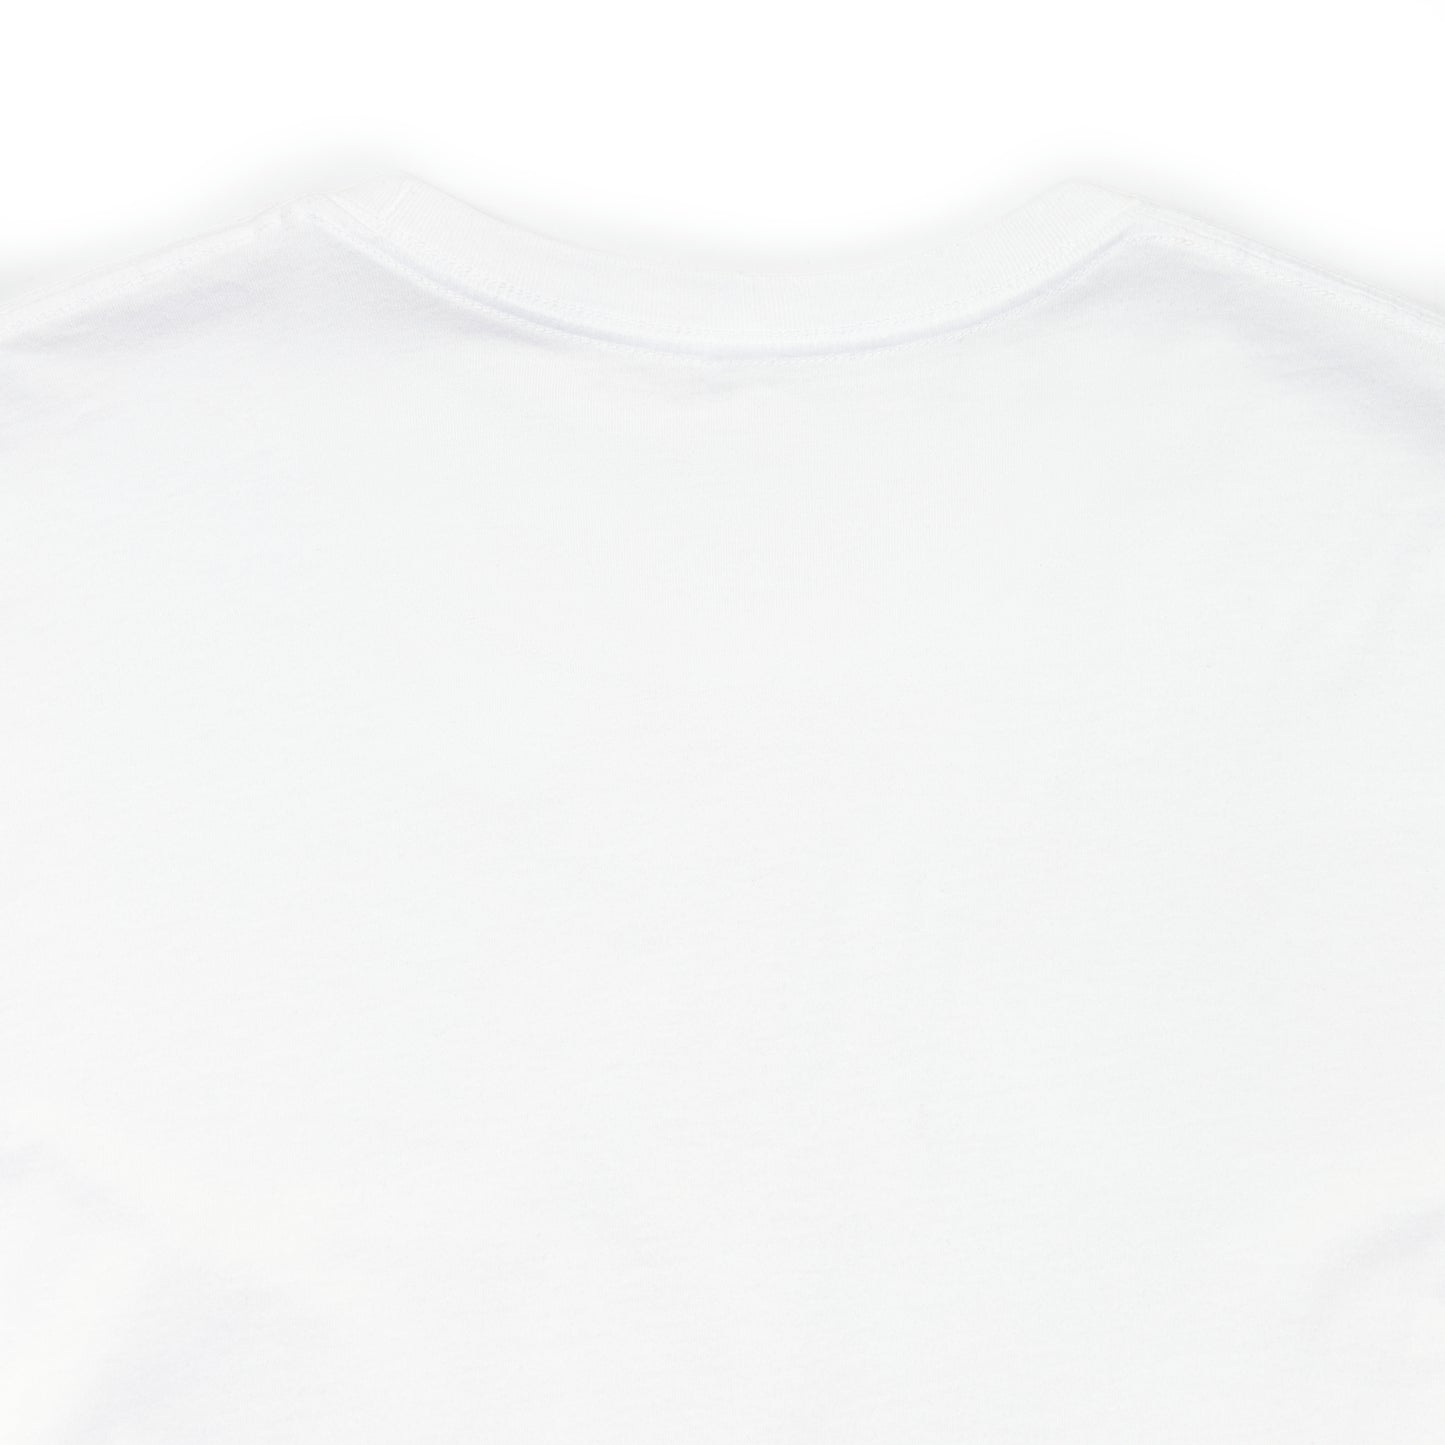 Unisex Jersey Short Sleeve Tee - Freedom Is Golden Unisex Retro America T-shirts